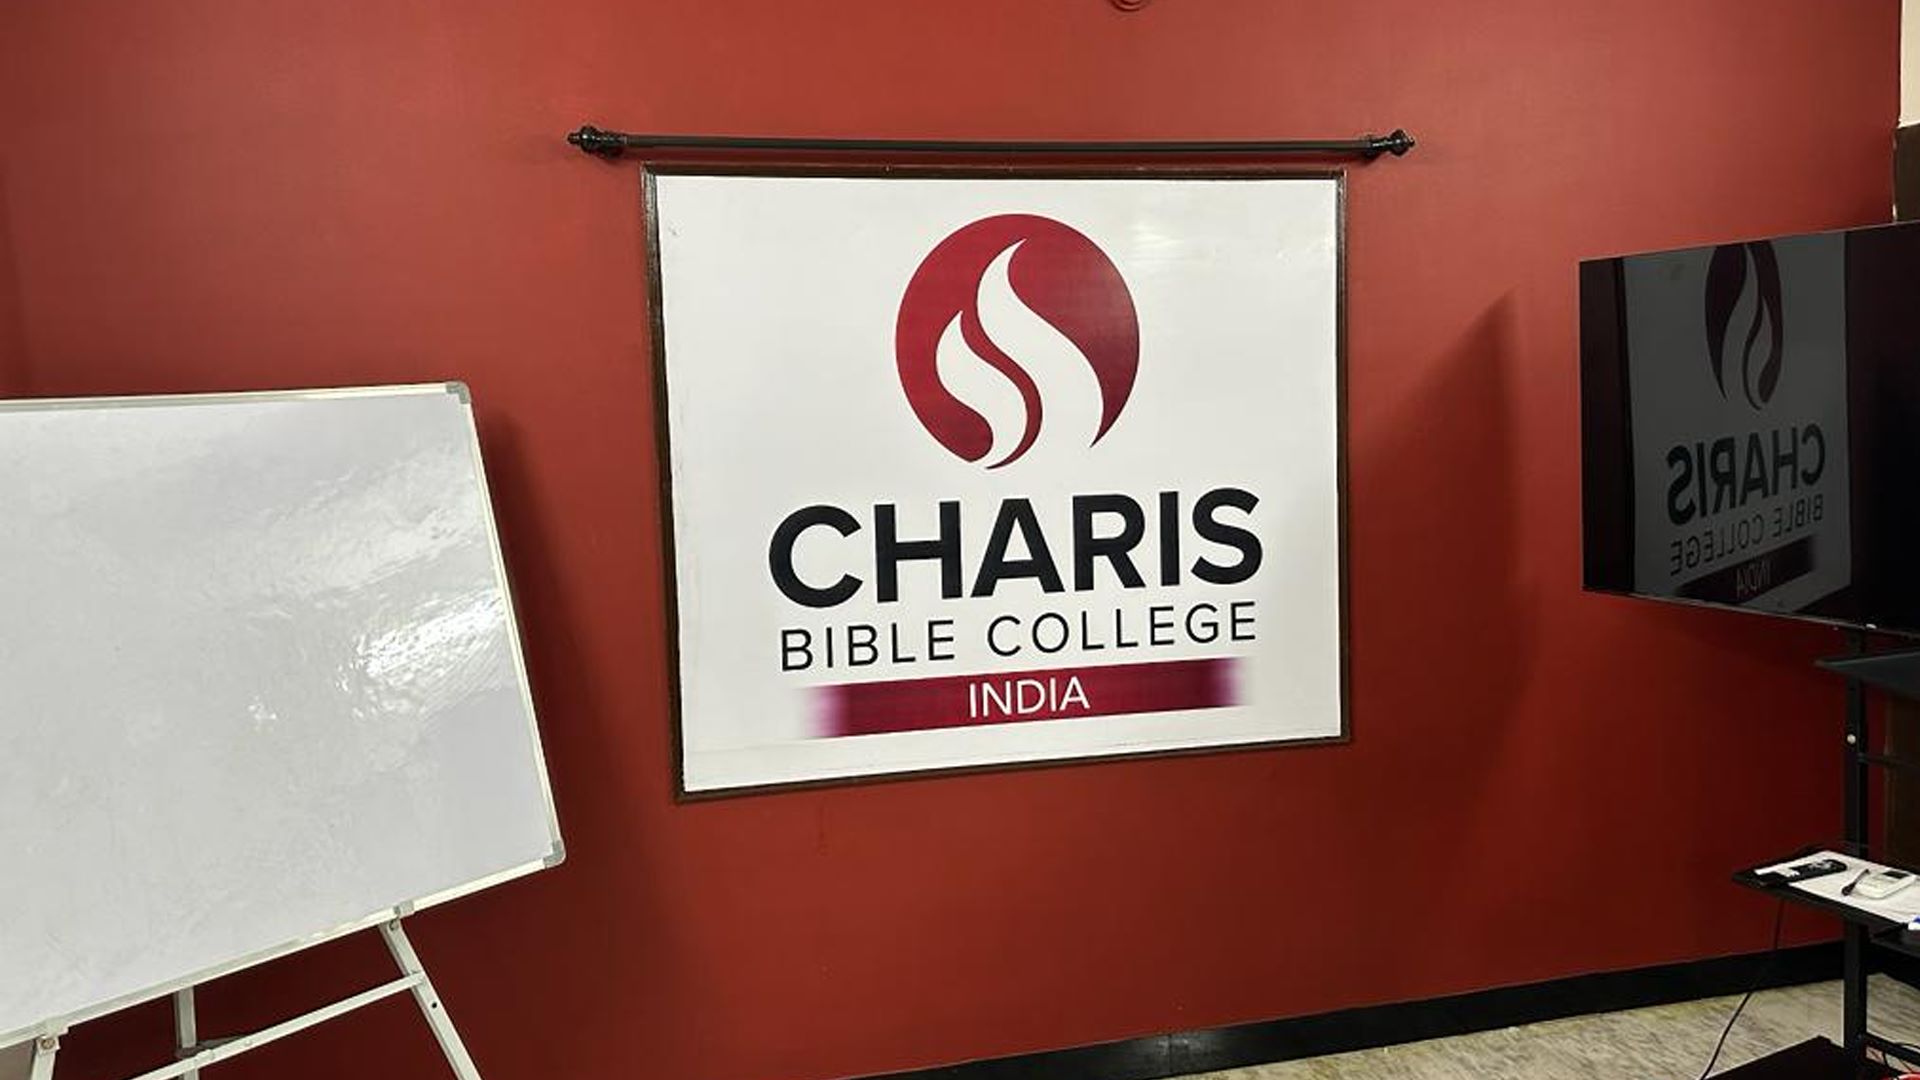 Charis Bible college India